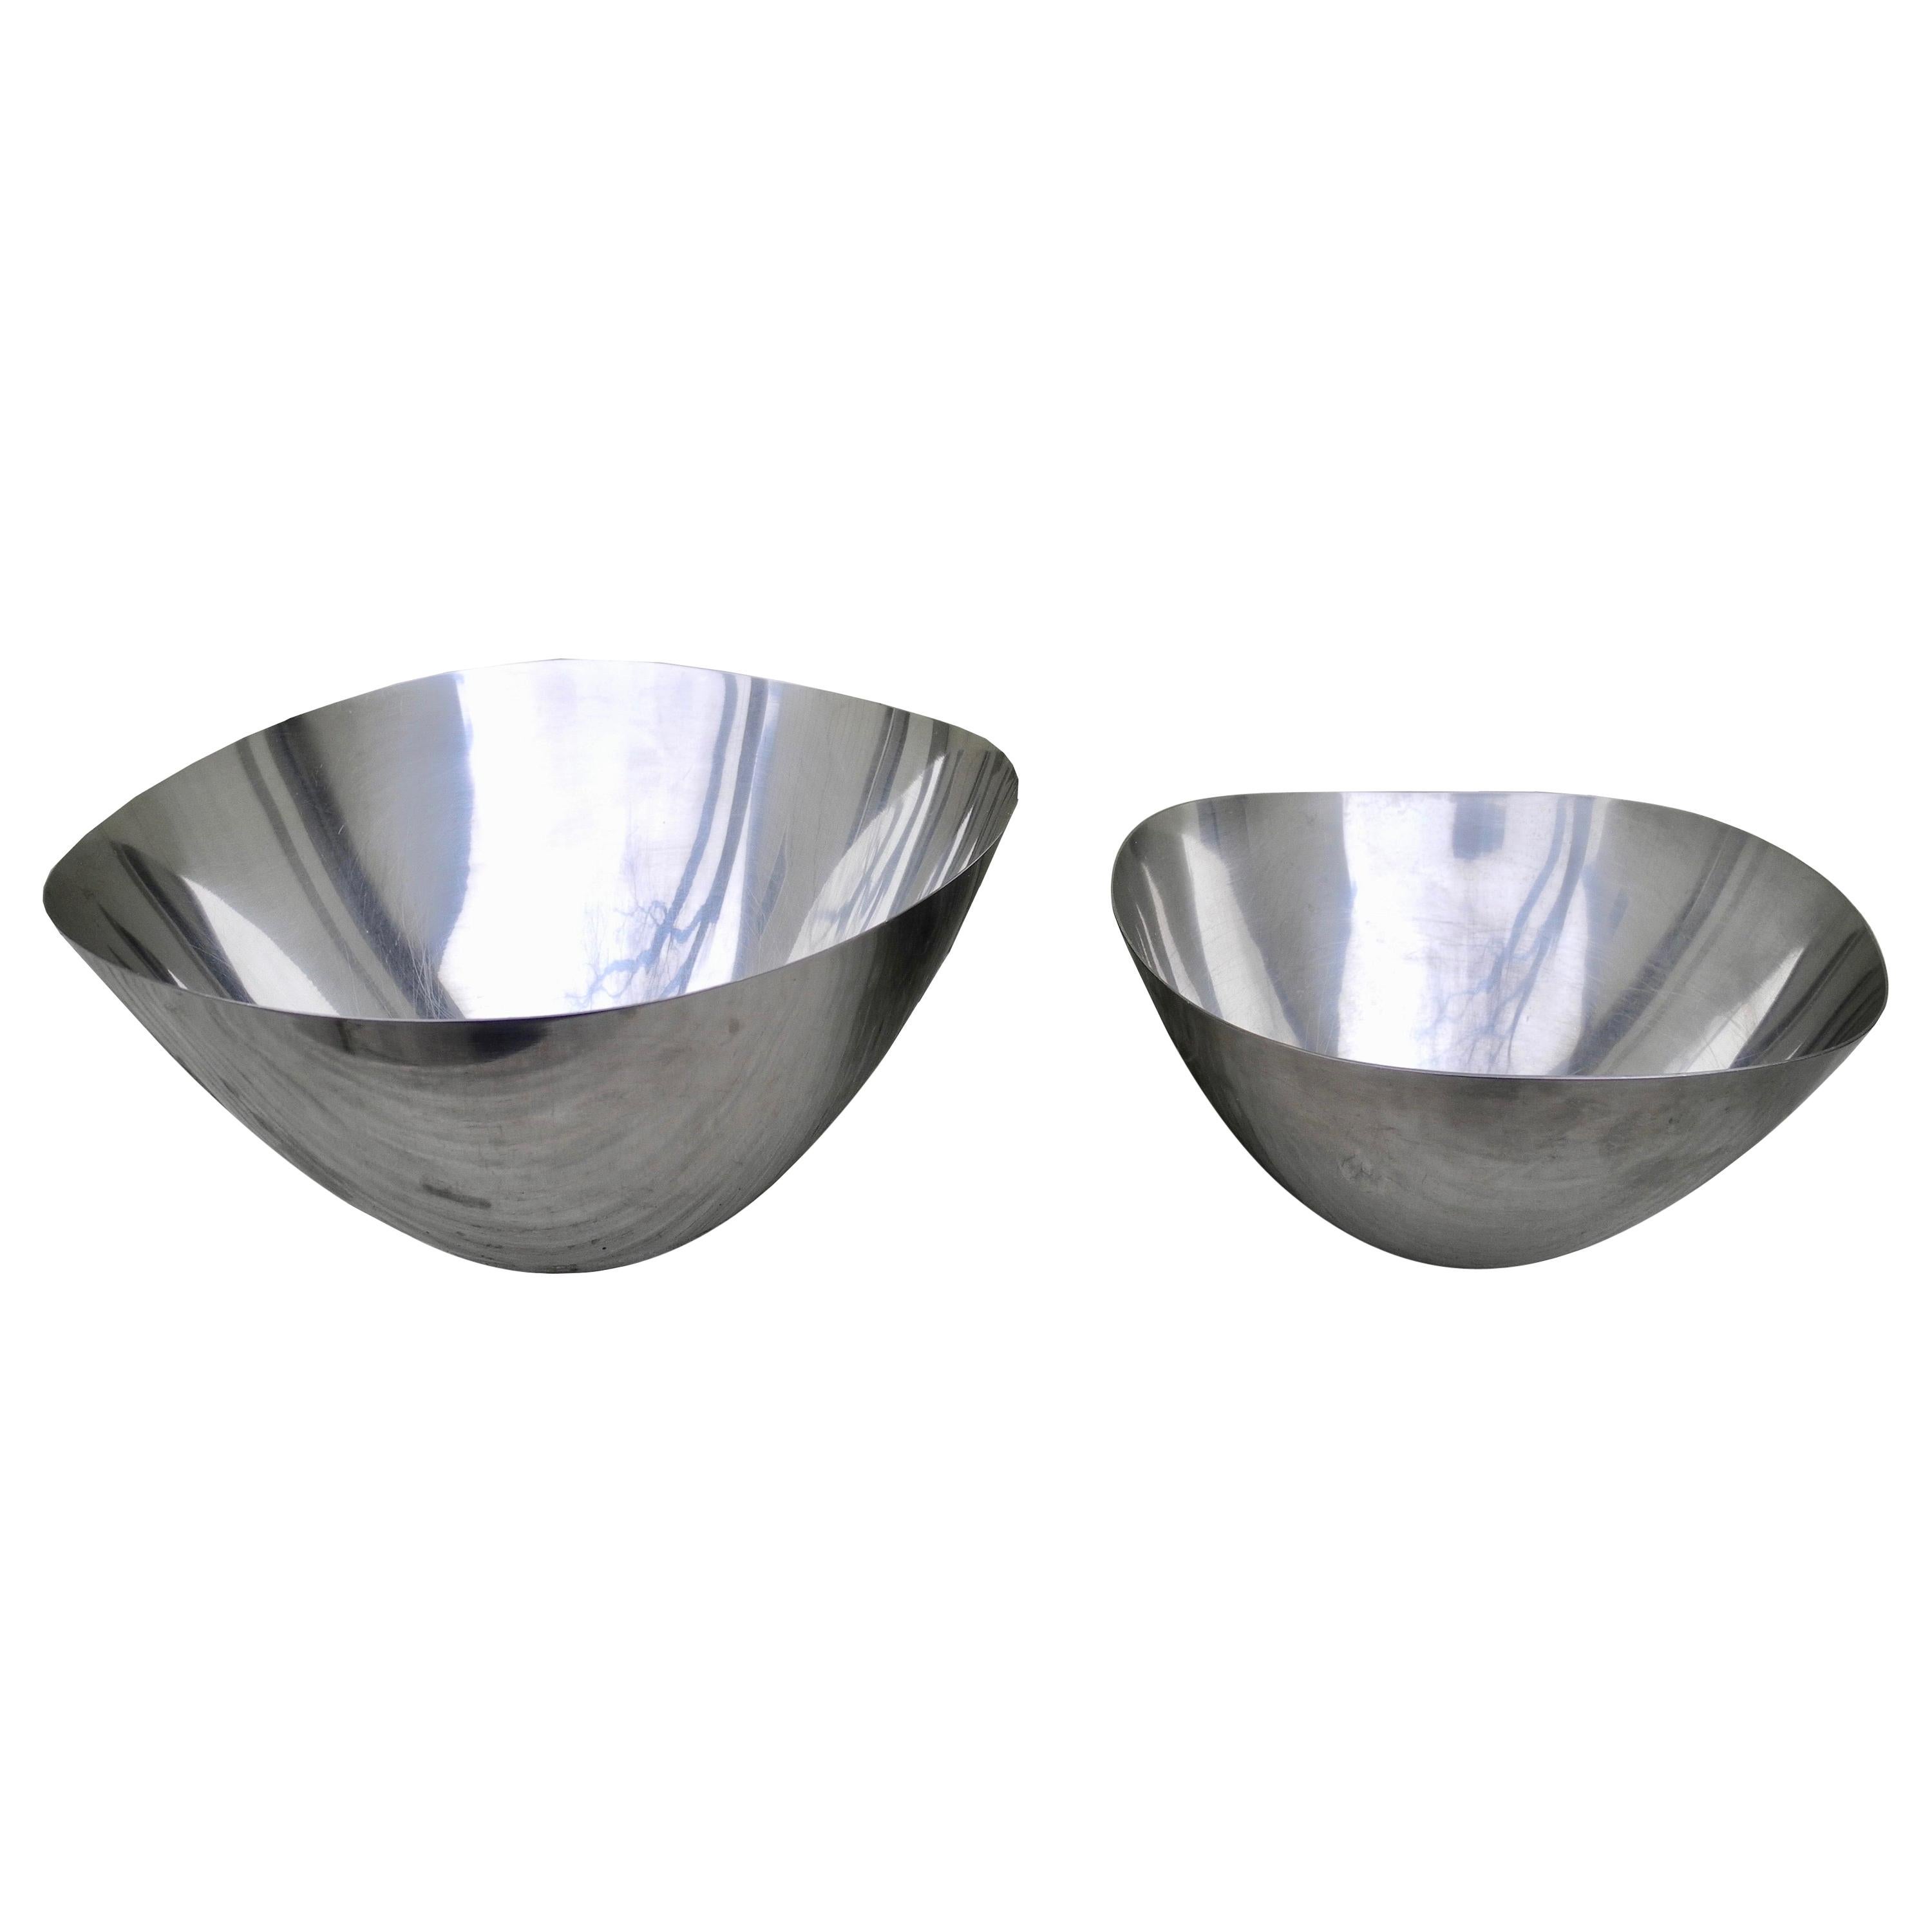 Pair of Vintage Stelton Stainless Steel Modern Design Sculptural Bowls, Denmark For Sale